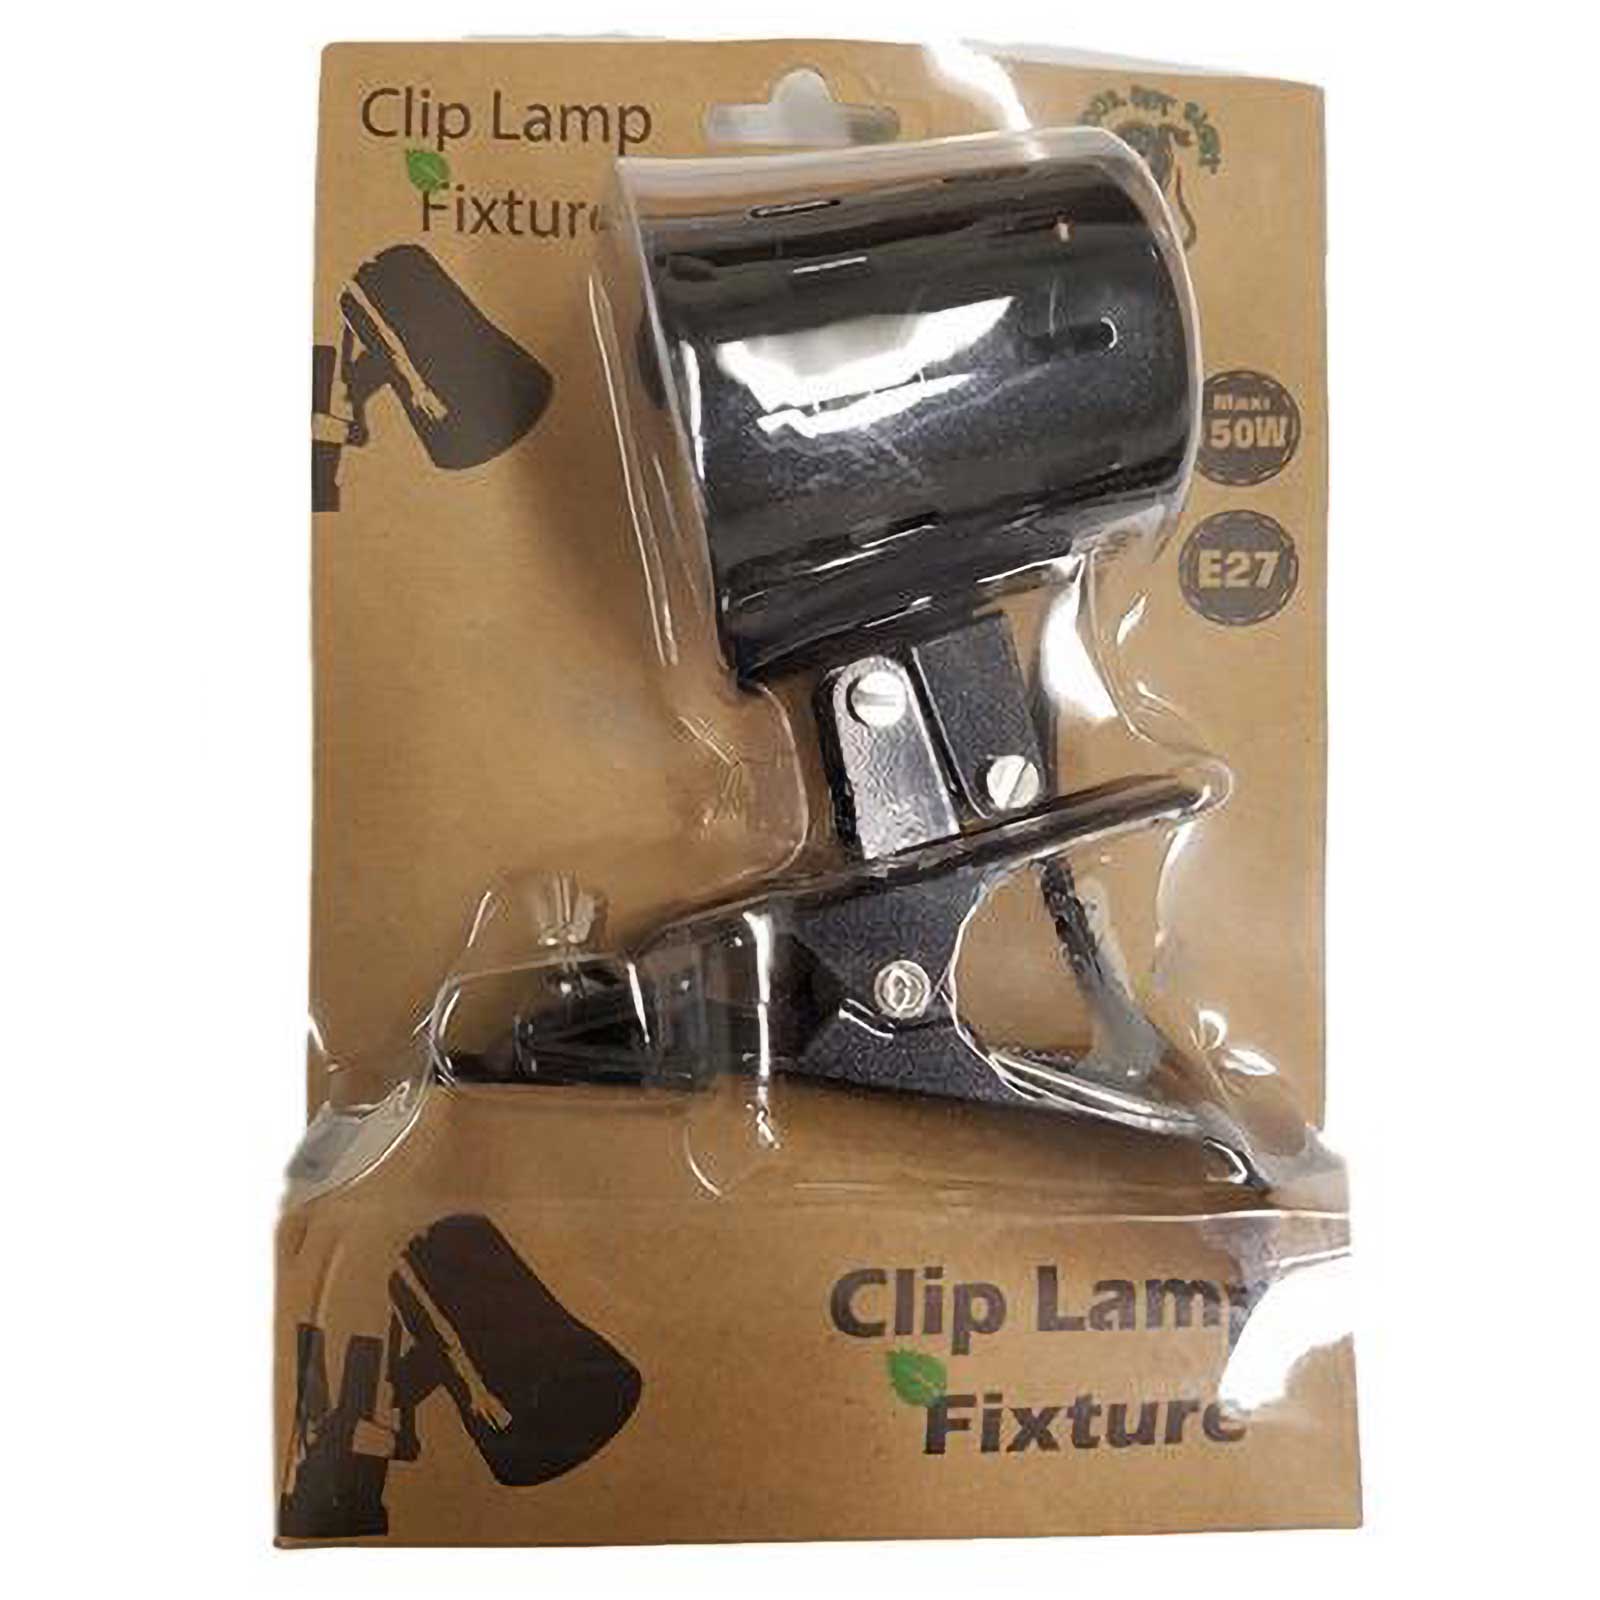 Get Your Pet Right Clip Lamp Fixture